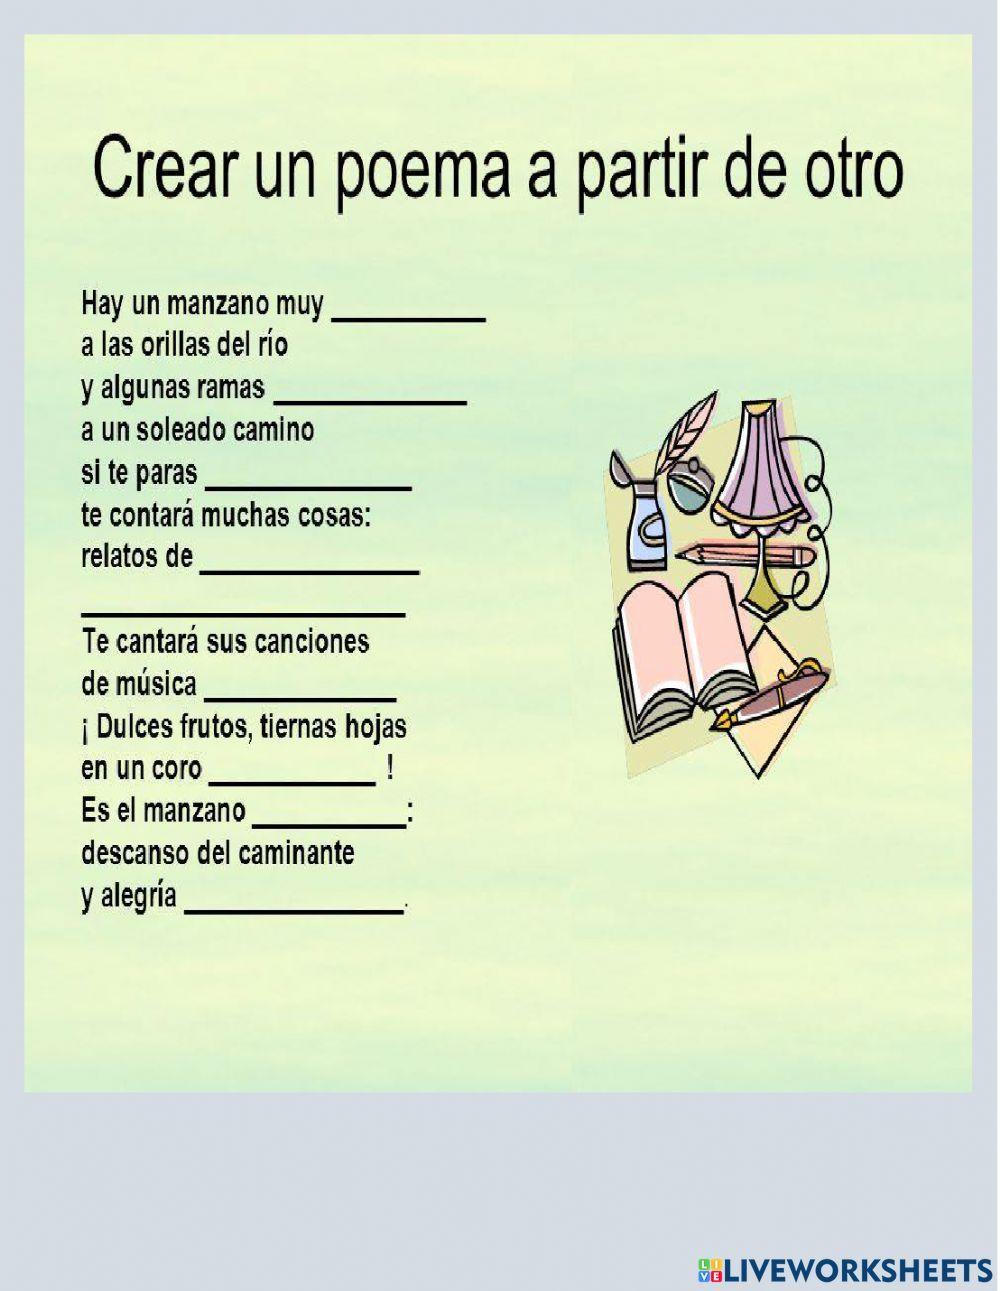 Crear un poema interactive worksheet | Live Worksheets